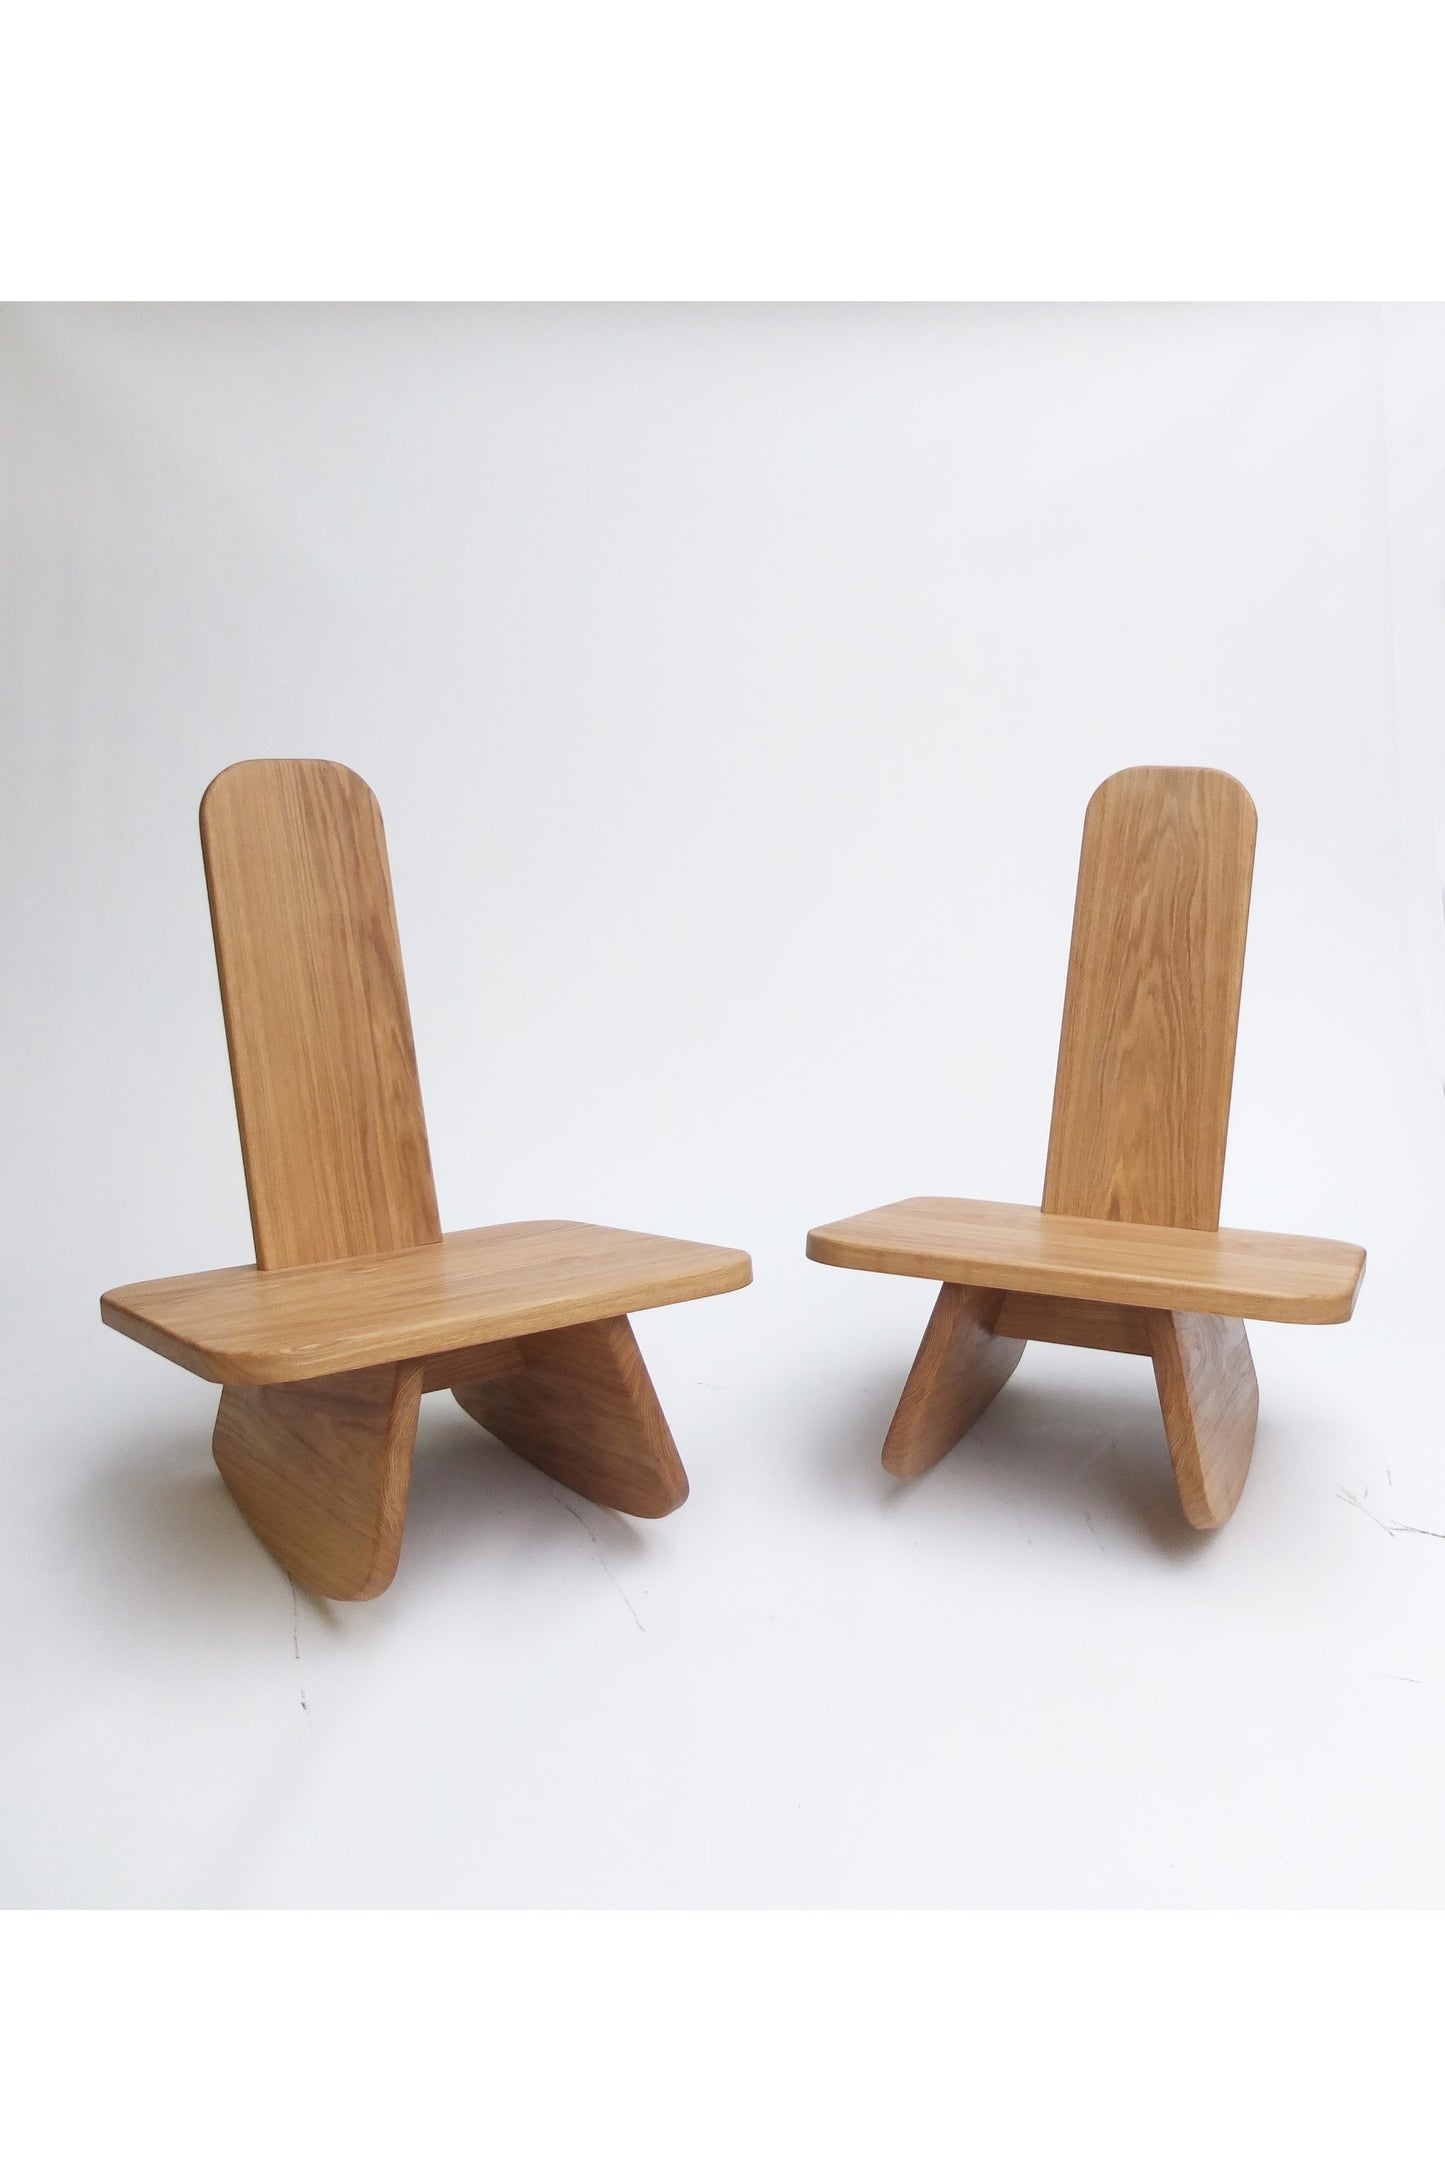 Mali Chair - Oak Chairs